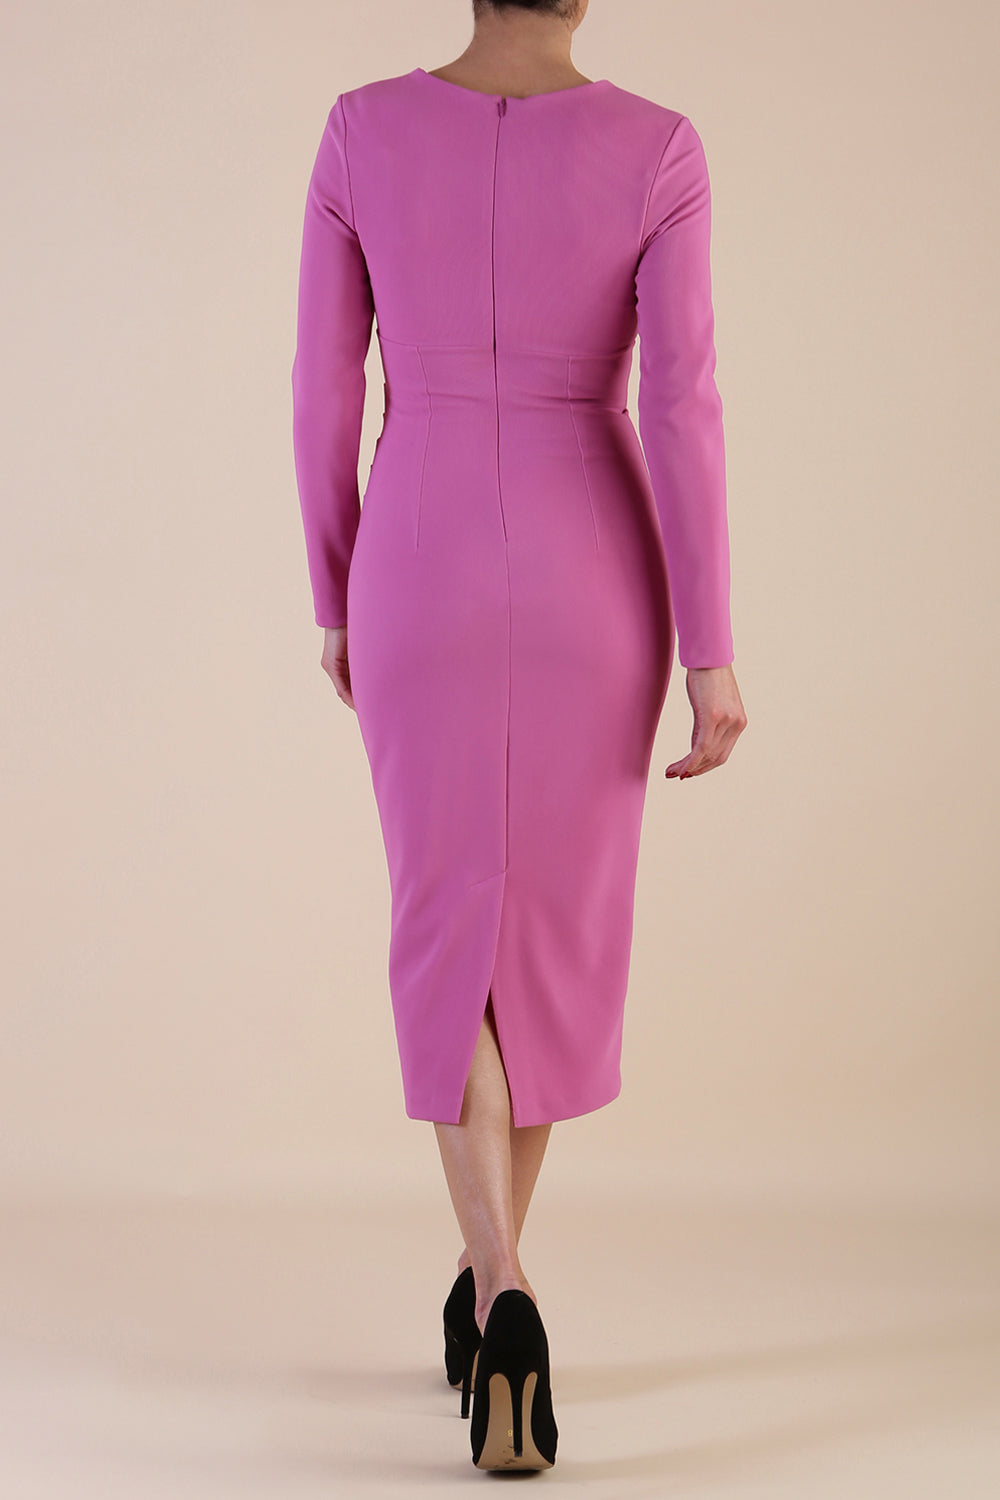 Model wearing diva catwalk Long Sleeved Lydia Midi pencil dress in  Begonia Pink